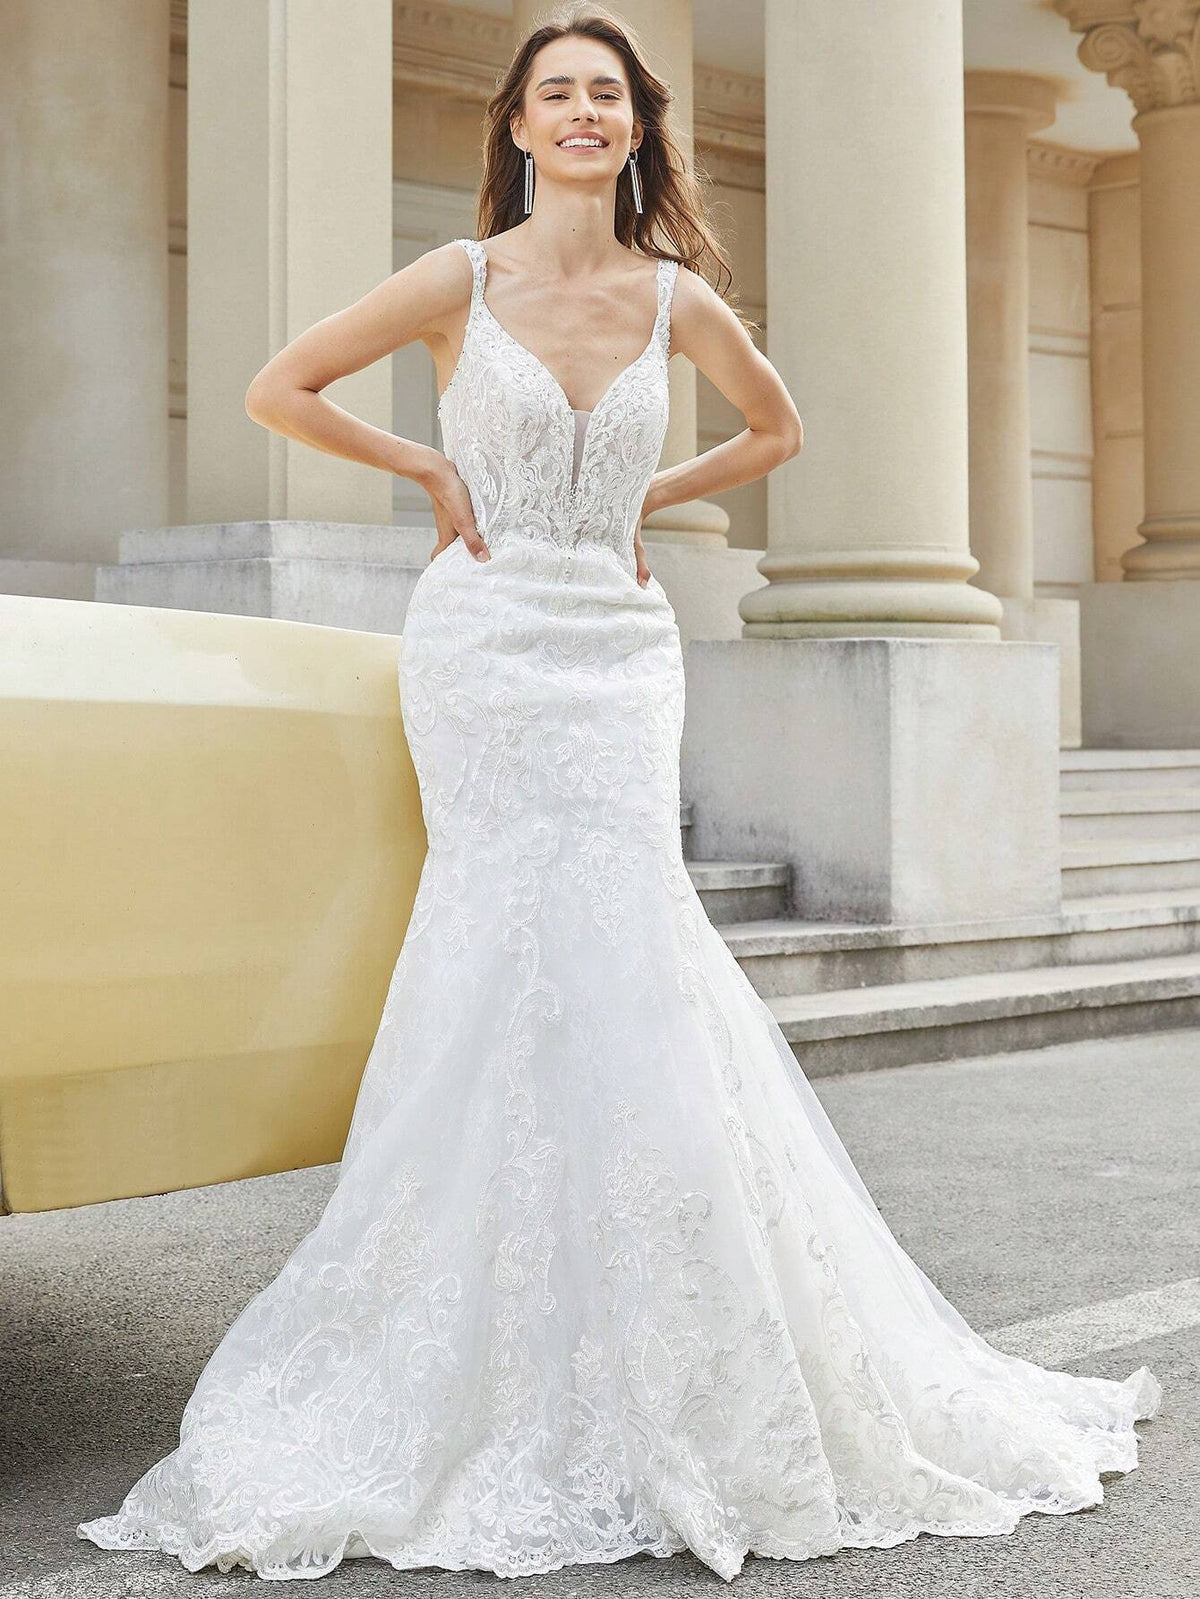 Solid Color Backless V-Neck Sleeveless Long Dress Wedding Dress